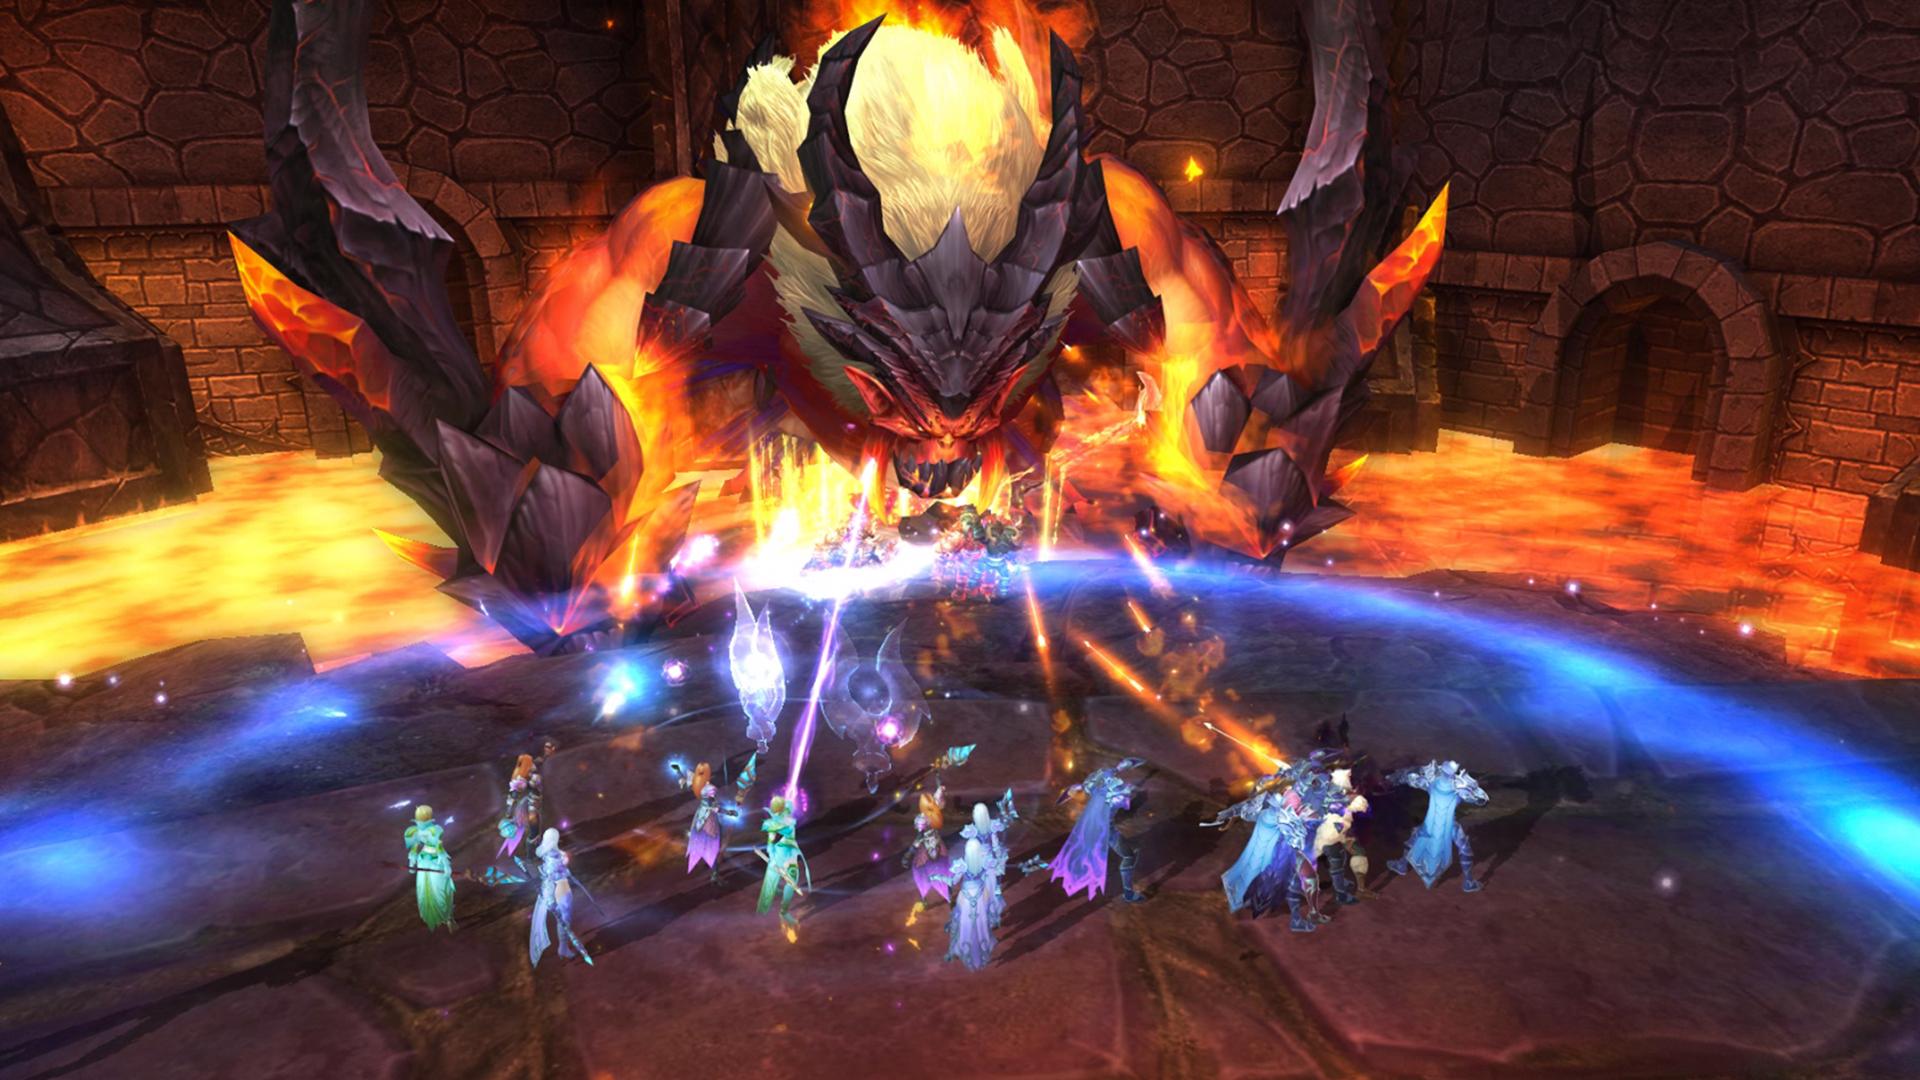 Screenshot №1 from game Crusaders of Light